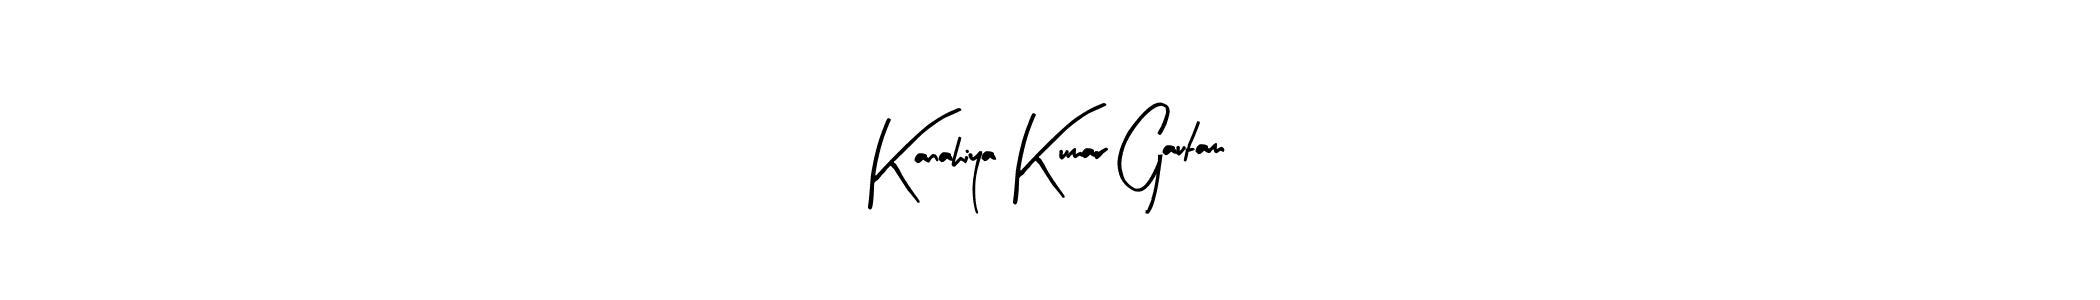 Make a beautiful signature design for name Kanahiya Kumar Gautam. Use this online signature maker to create a handwritten signature for free. Kanahiya Kumar Gautam signature style 8 images and pictures png